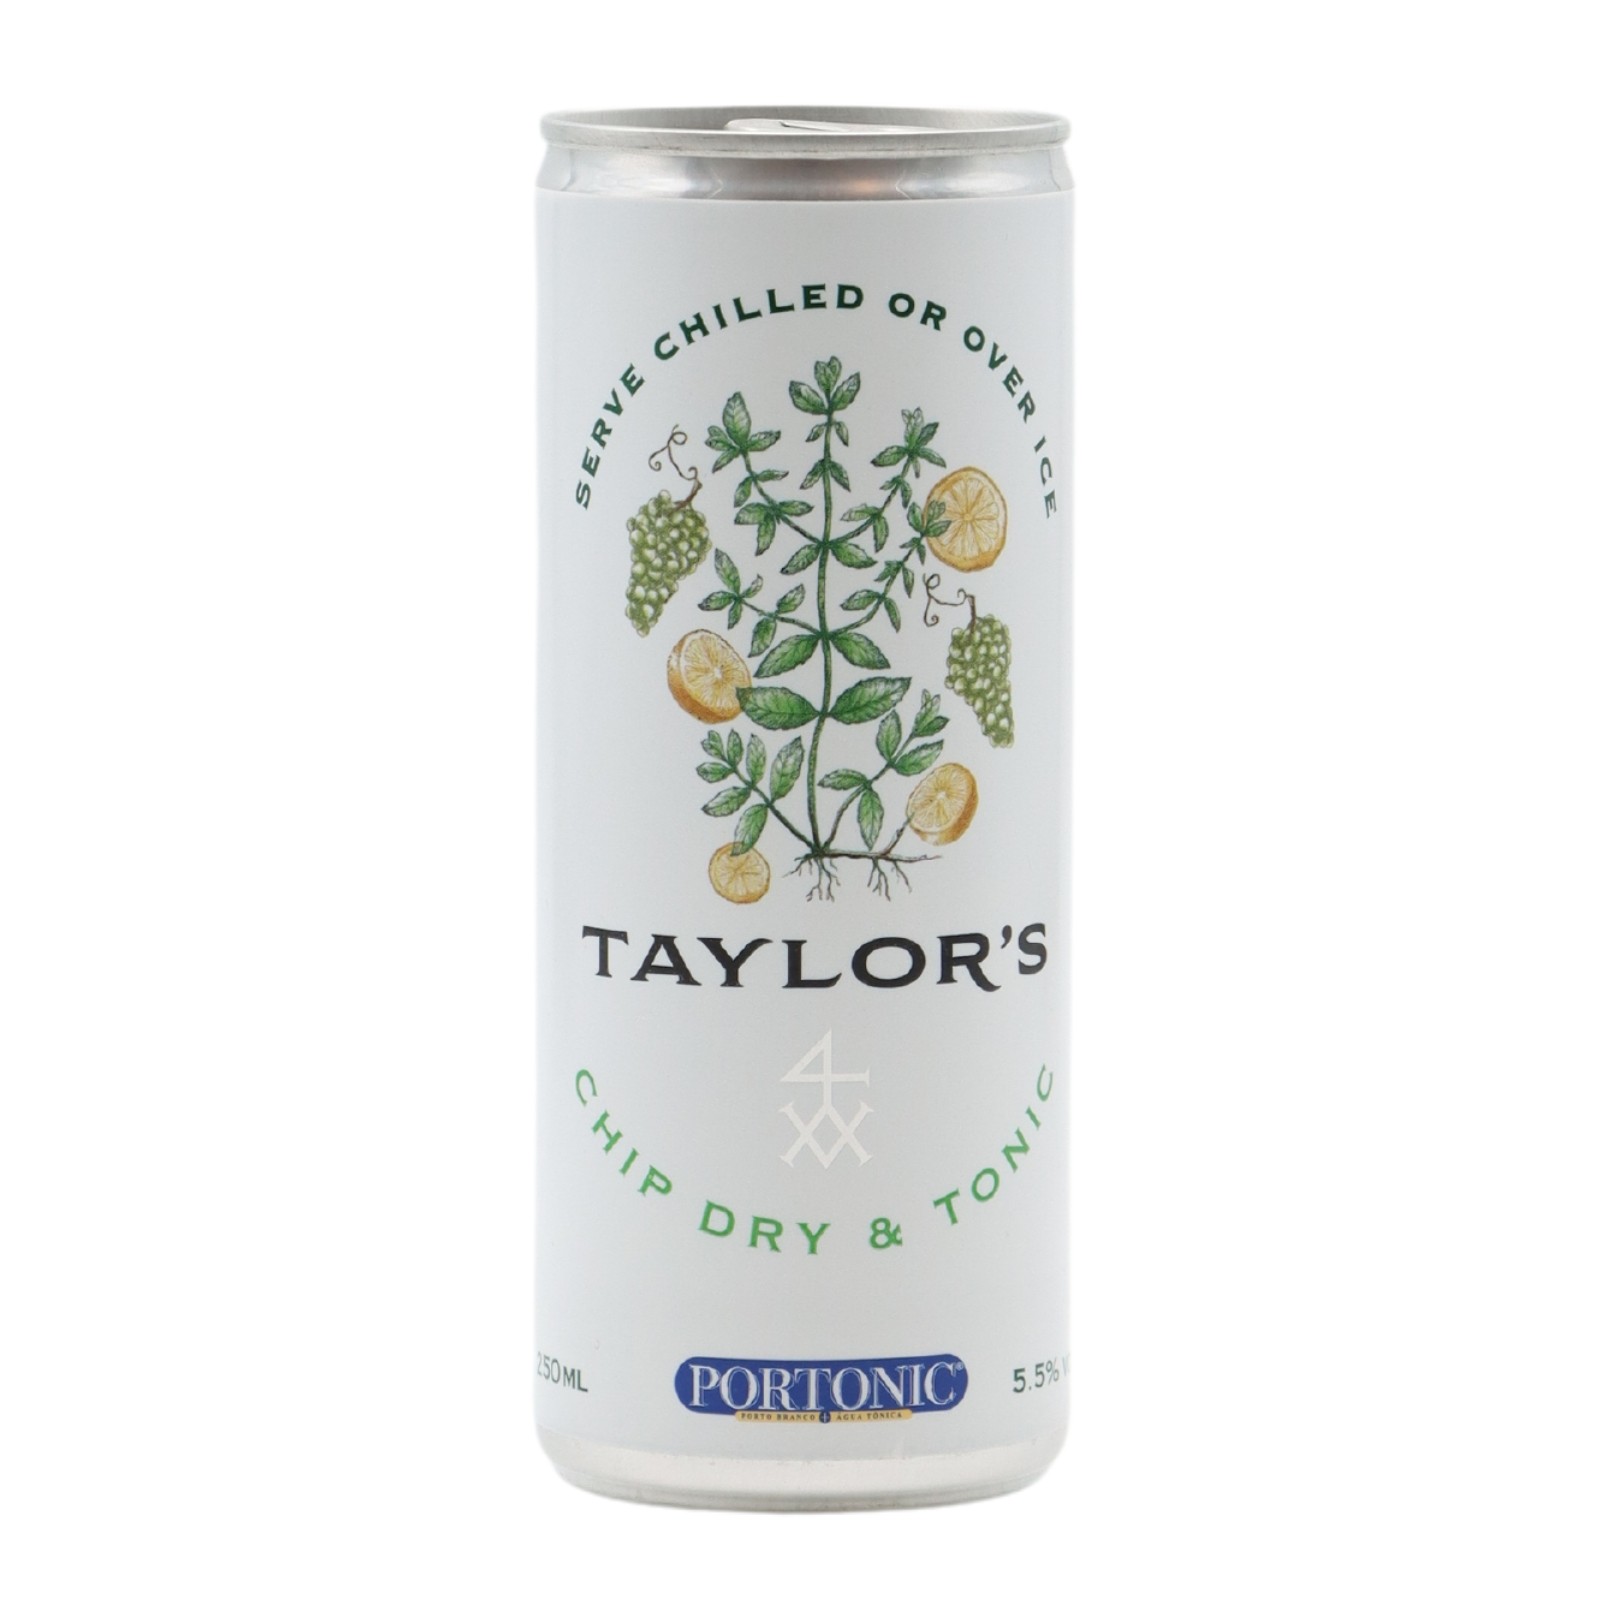 Taylors Chip Dry & Tonic en lata